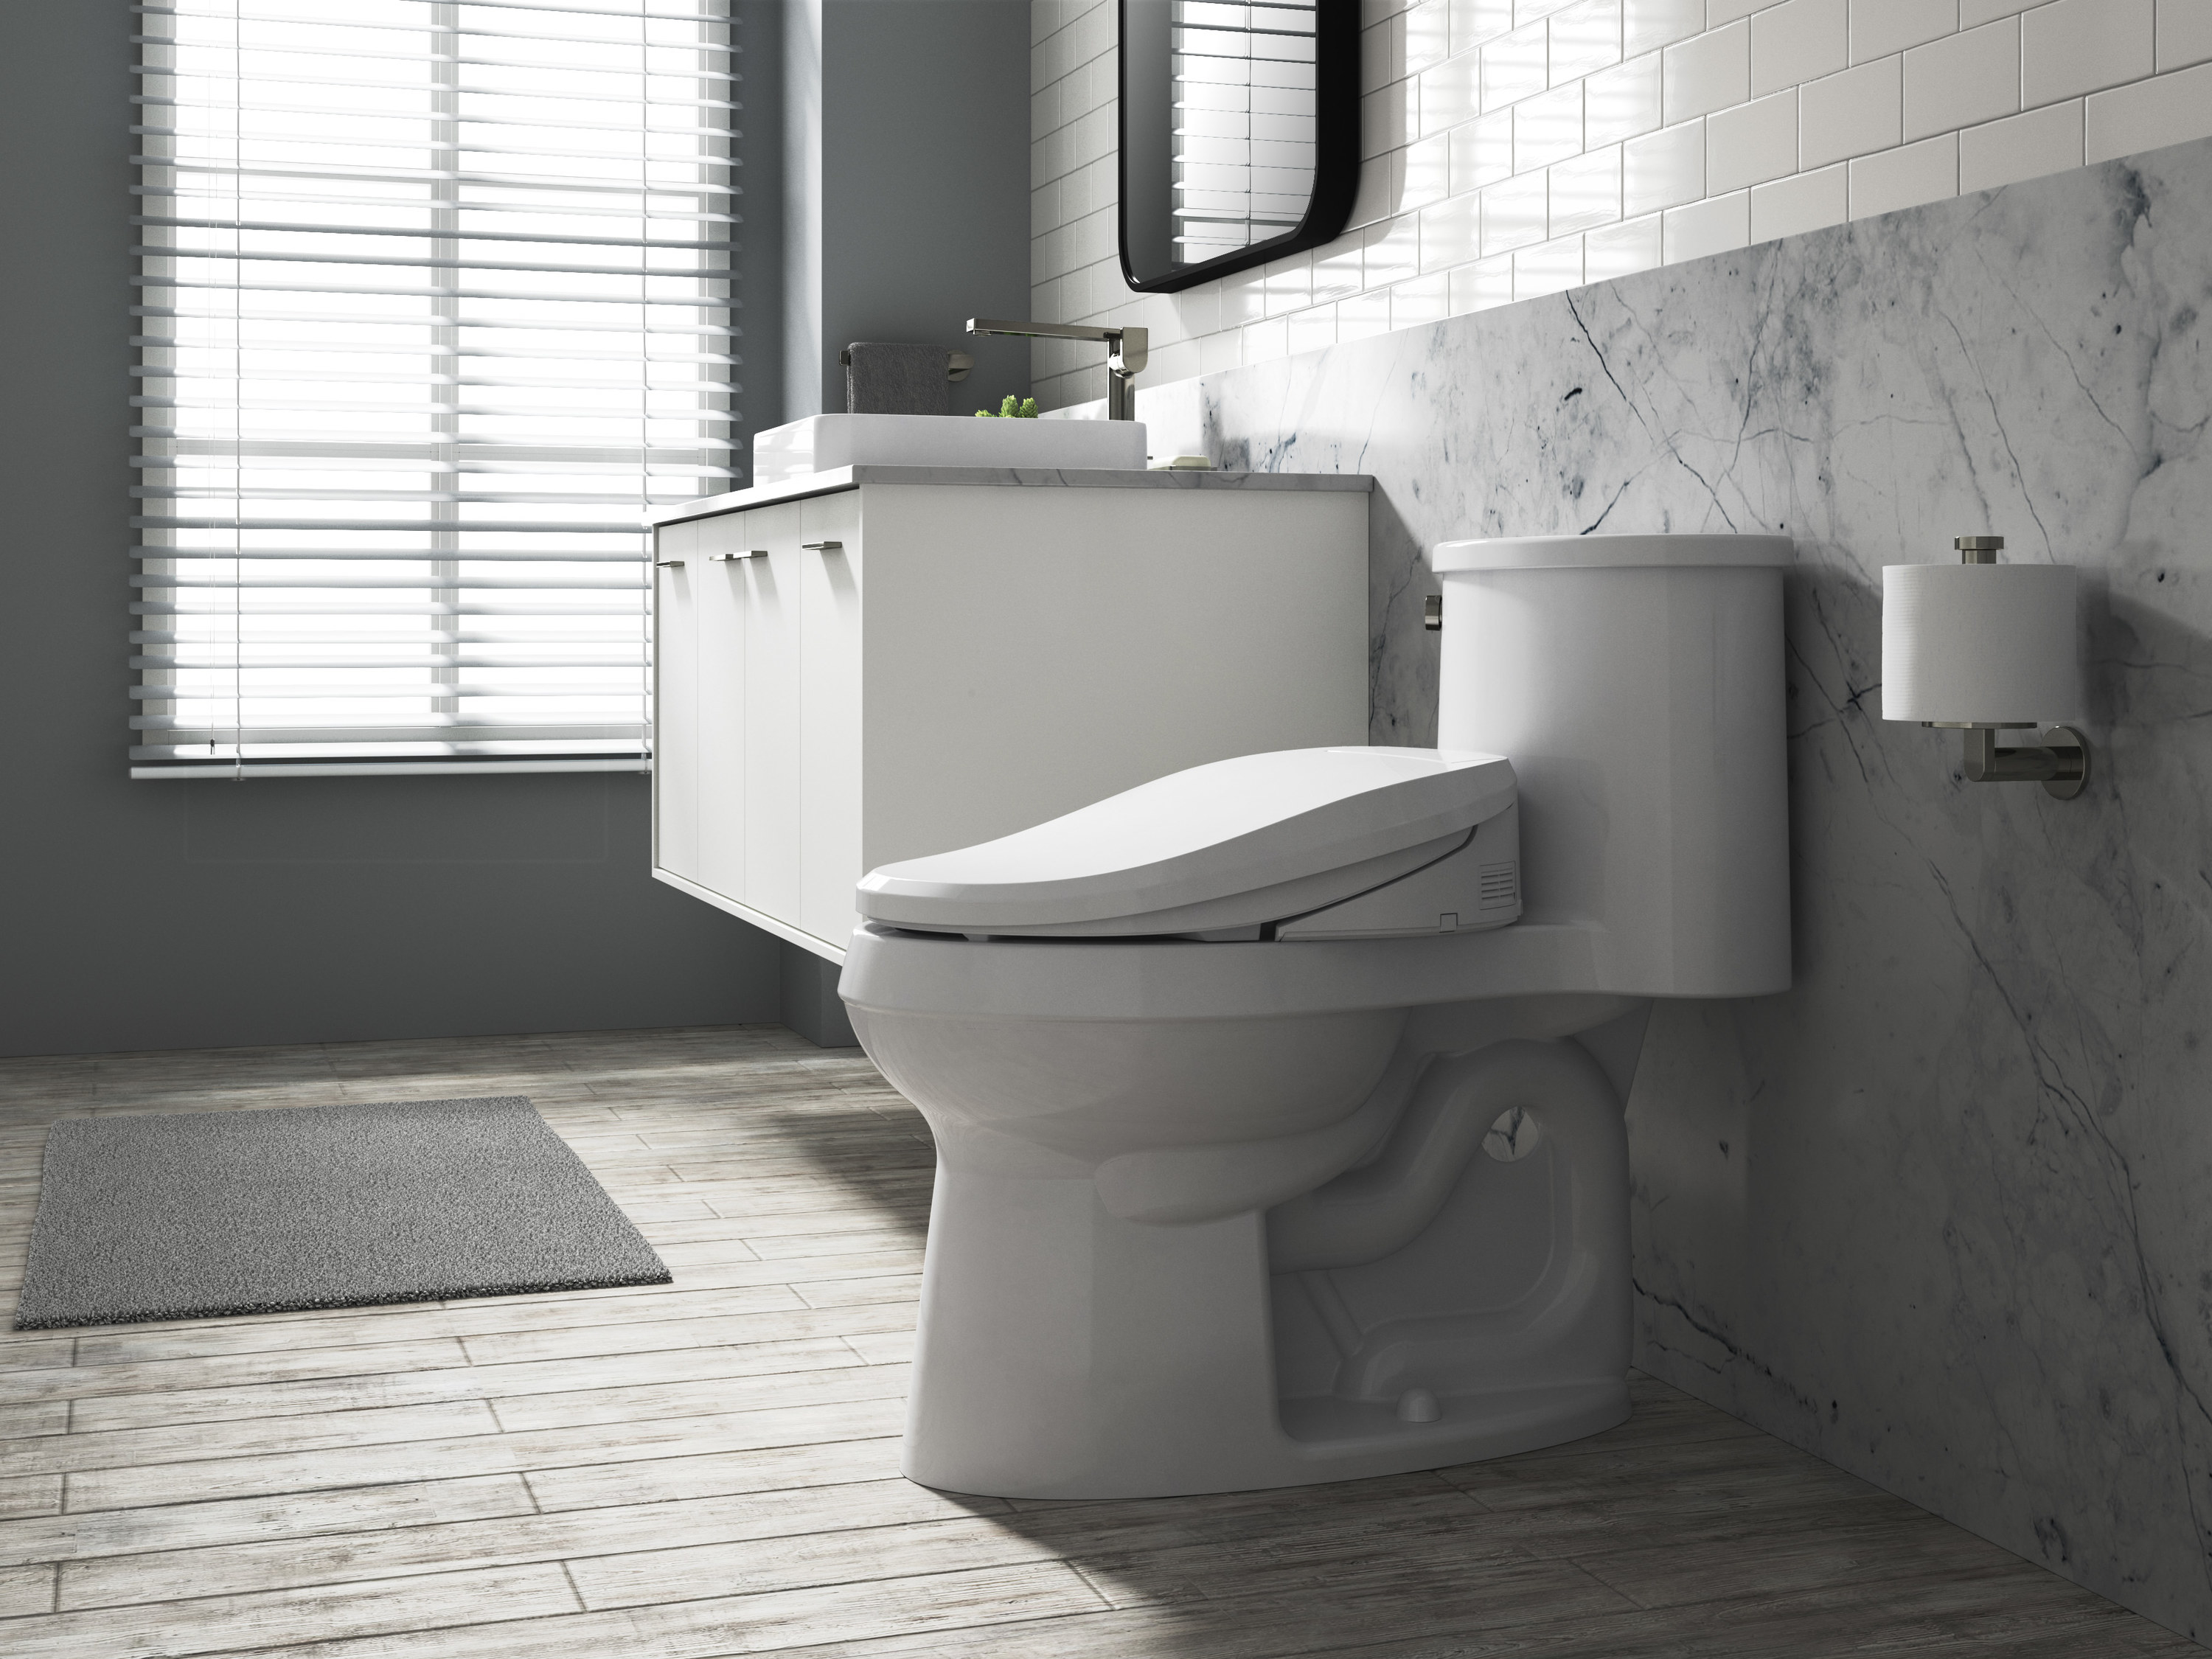 White heated bidet seat and toilet in bathroom